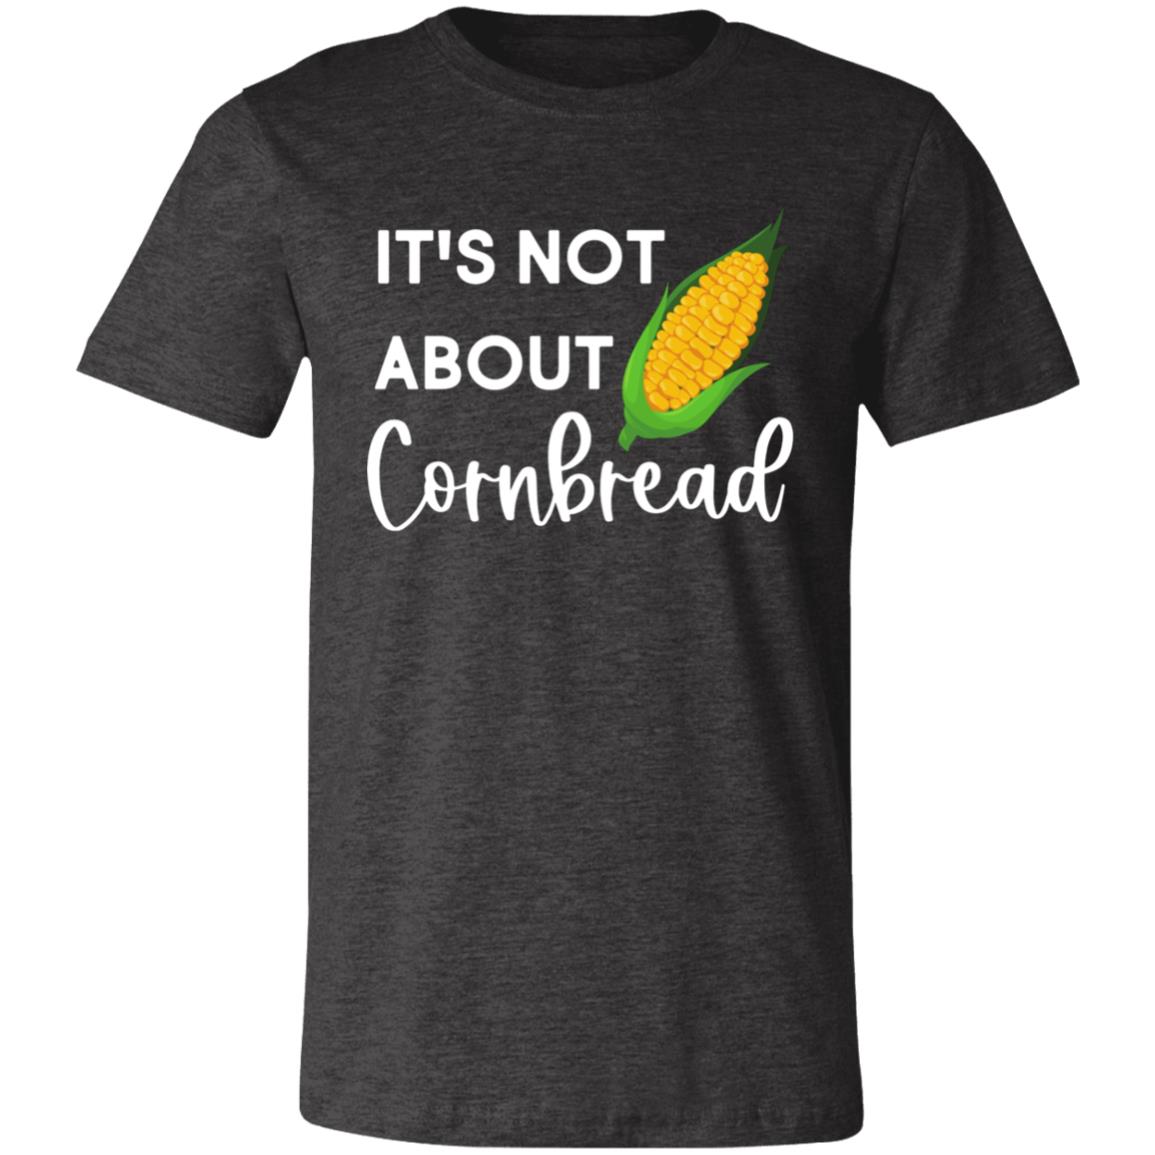 It's Not About Cornbread Shirt | DMB Shirt | Funny Concert Tee